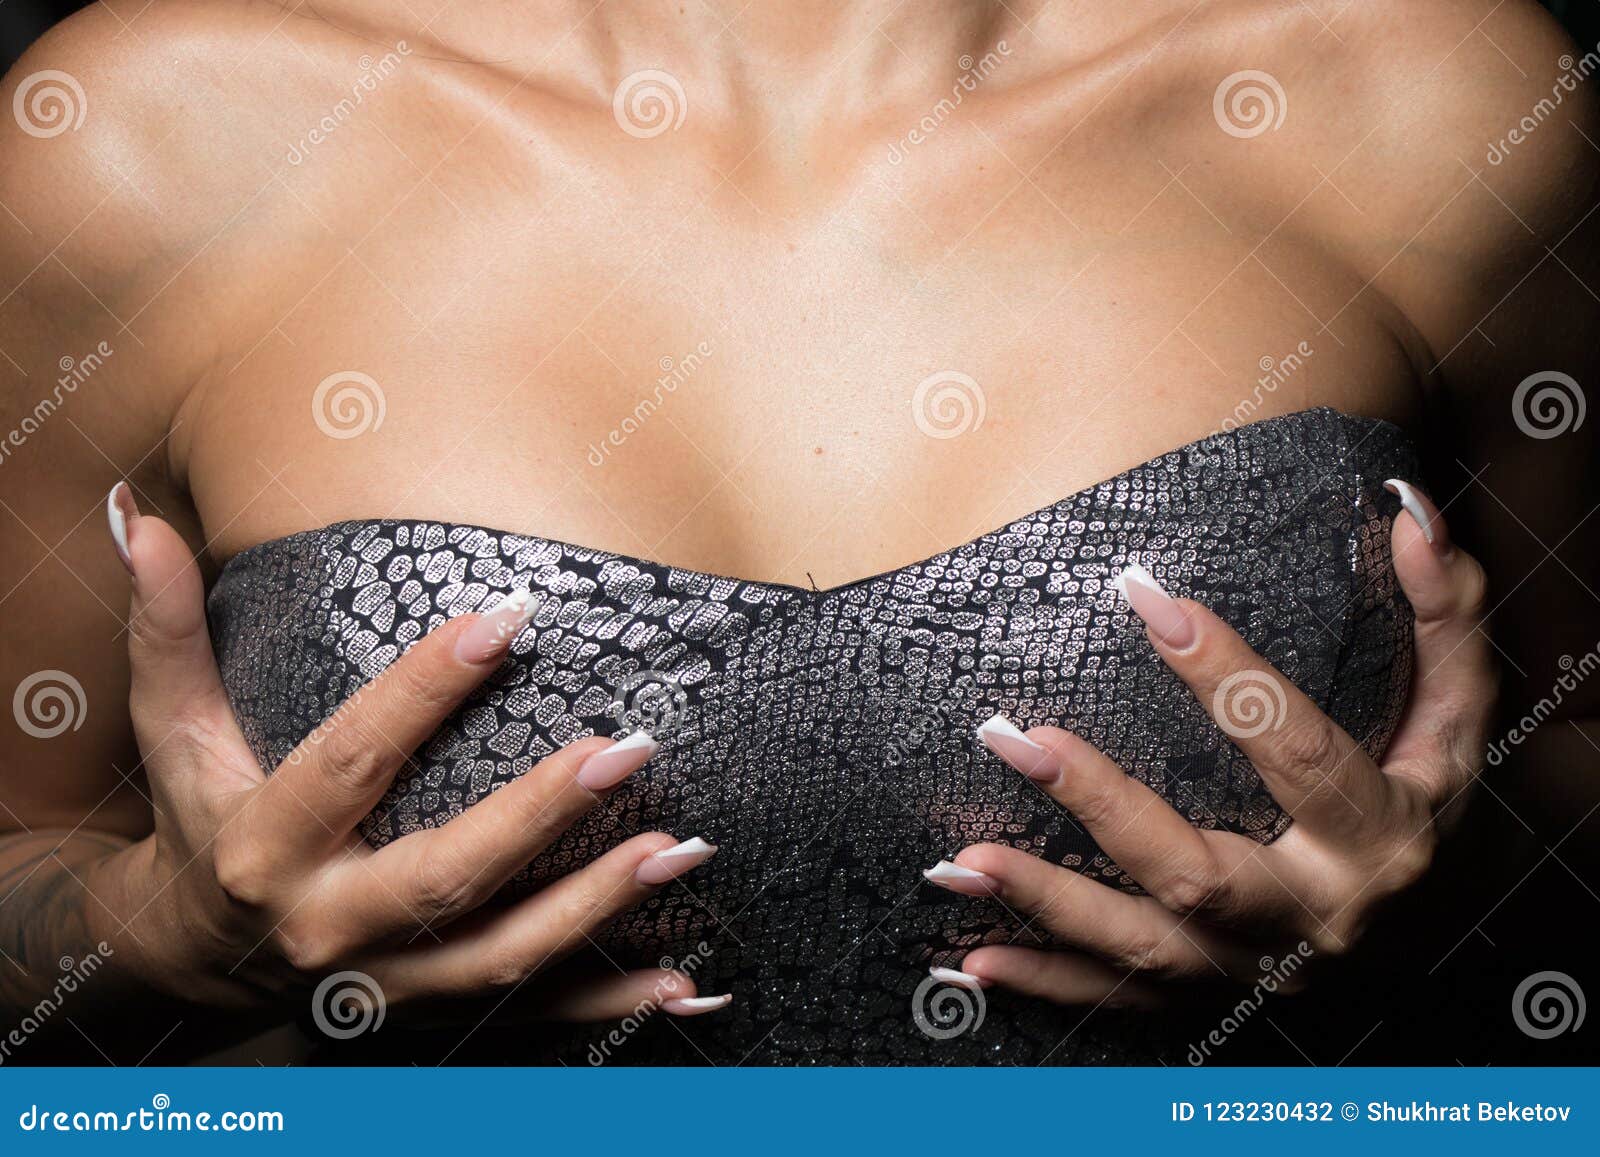 жен грудь для муж фото 113